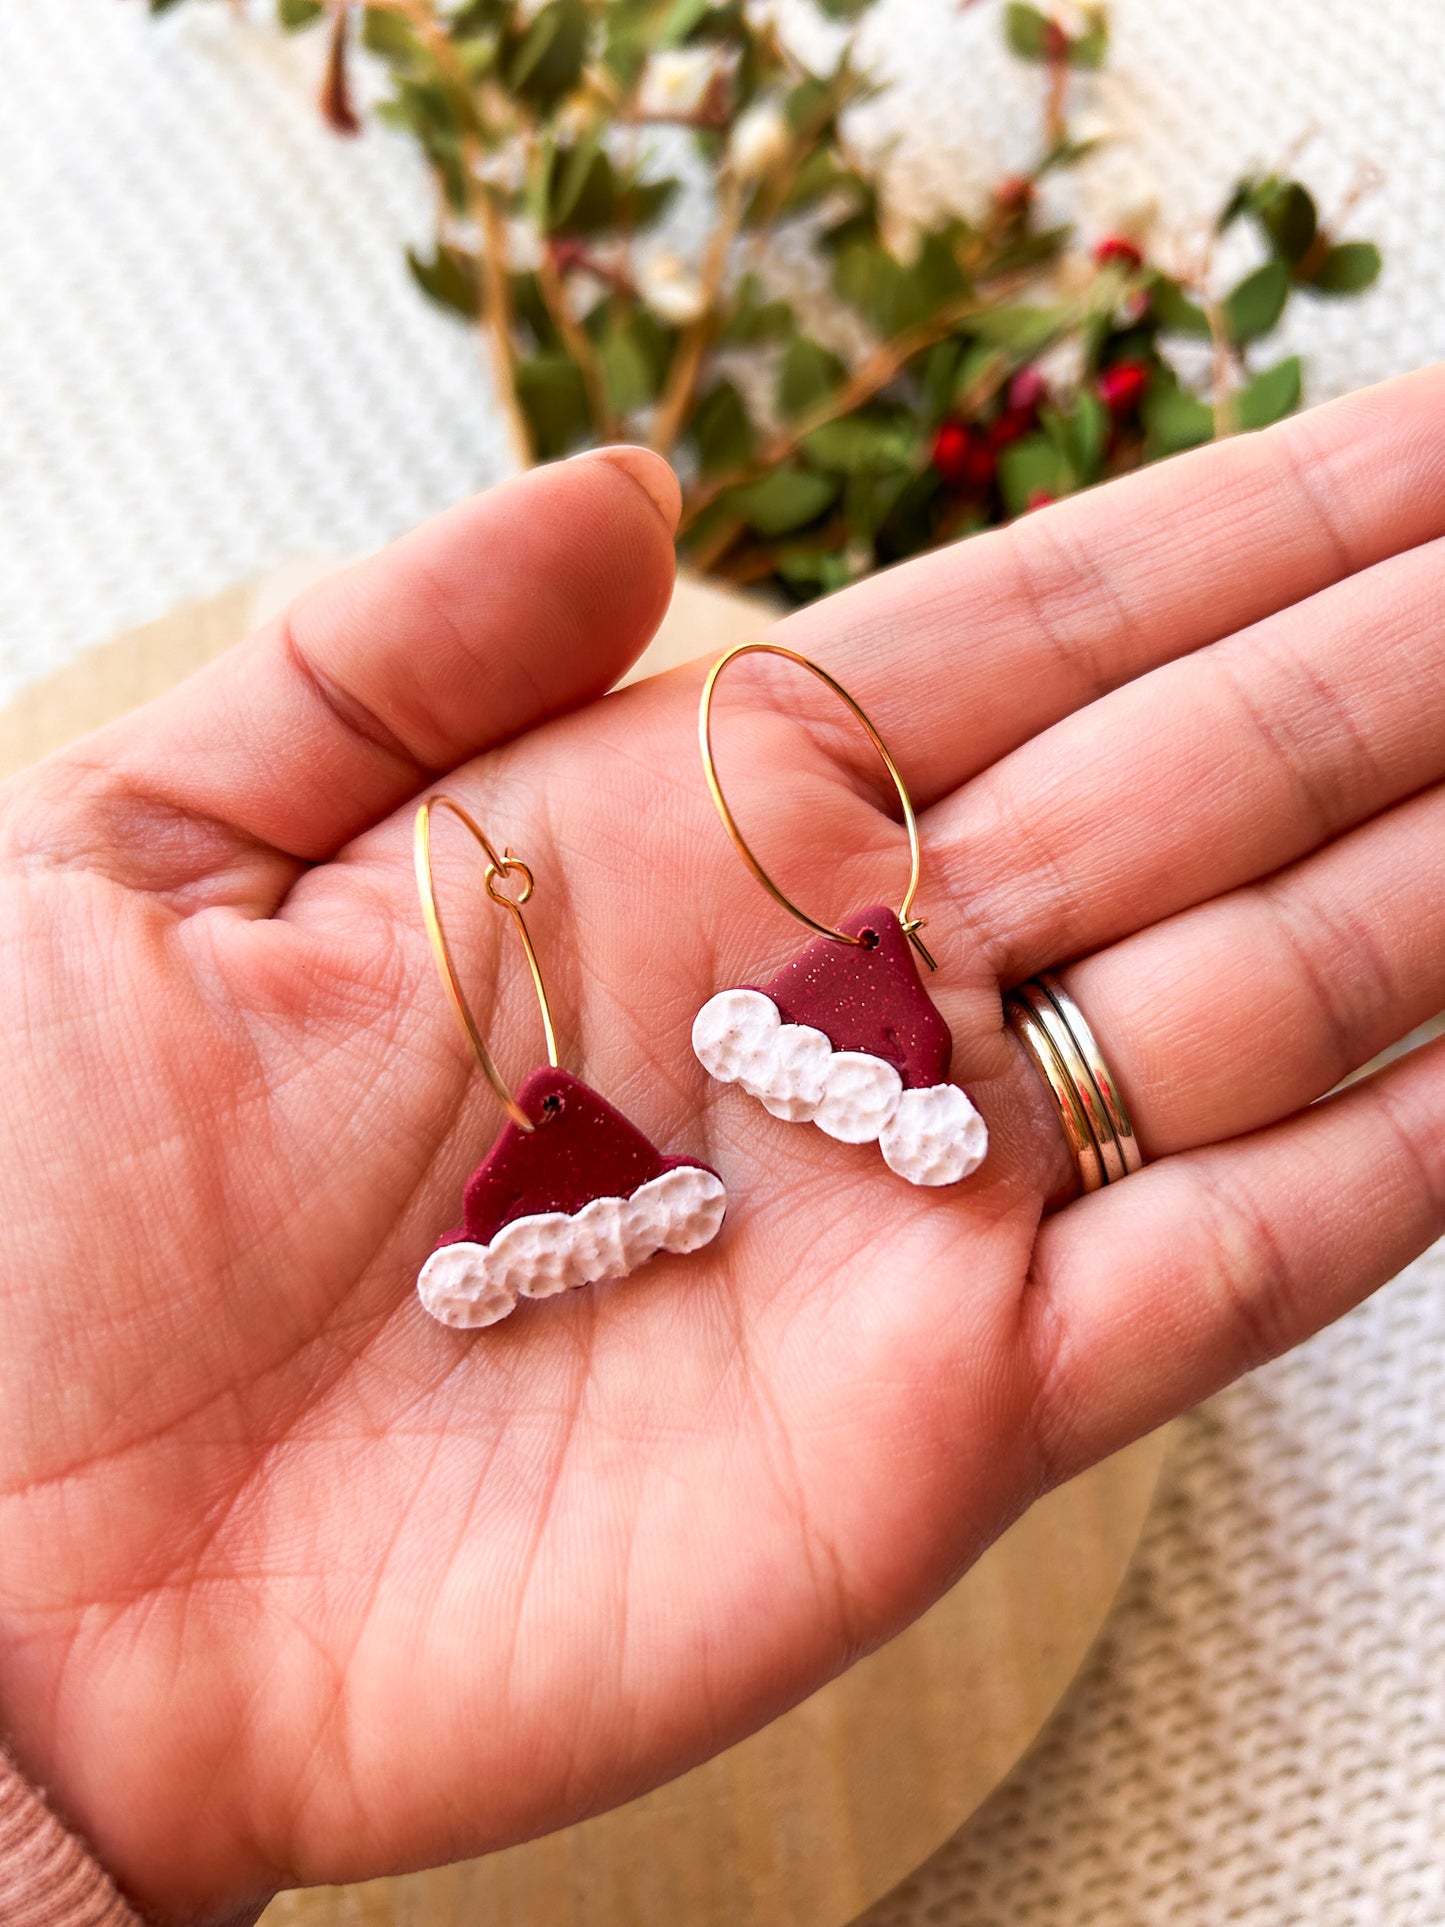 Santa's Coming to Town Clay Earrings | Santa Hats | Santa's Workshop | Christmas Earrings | Gift Earrings | Holiday Colors | Lightweight